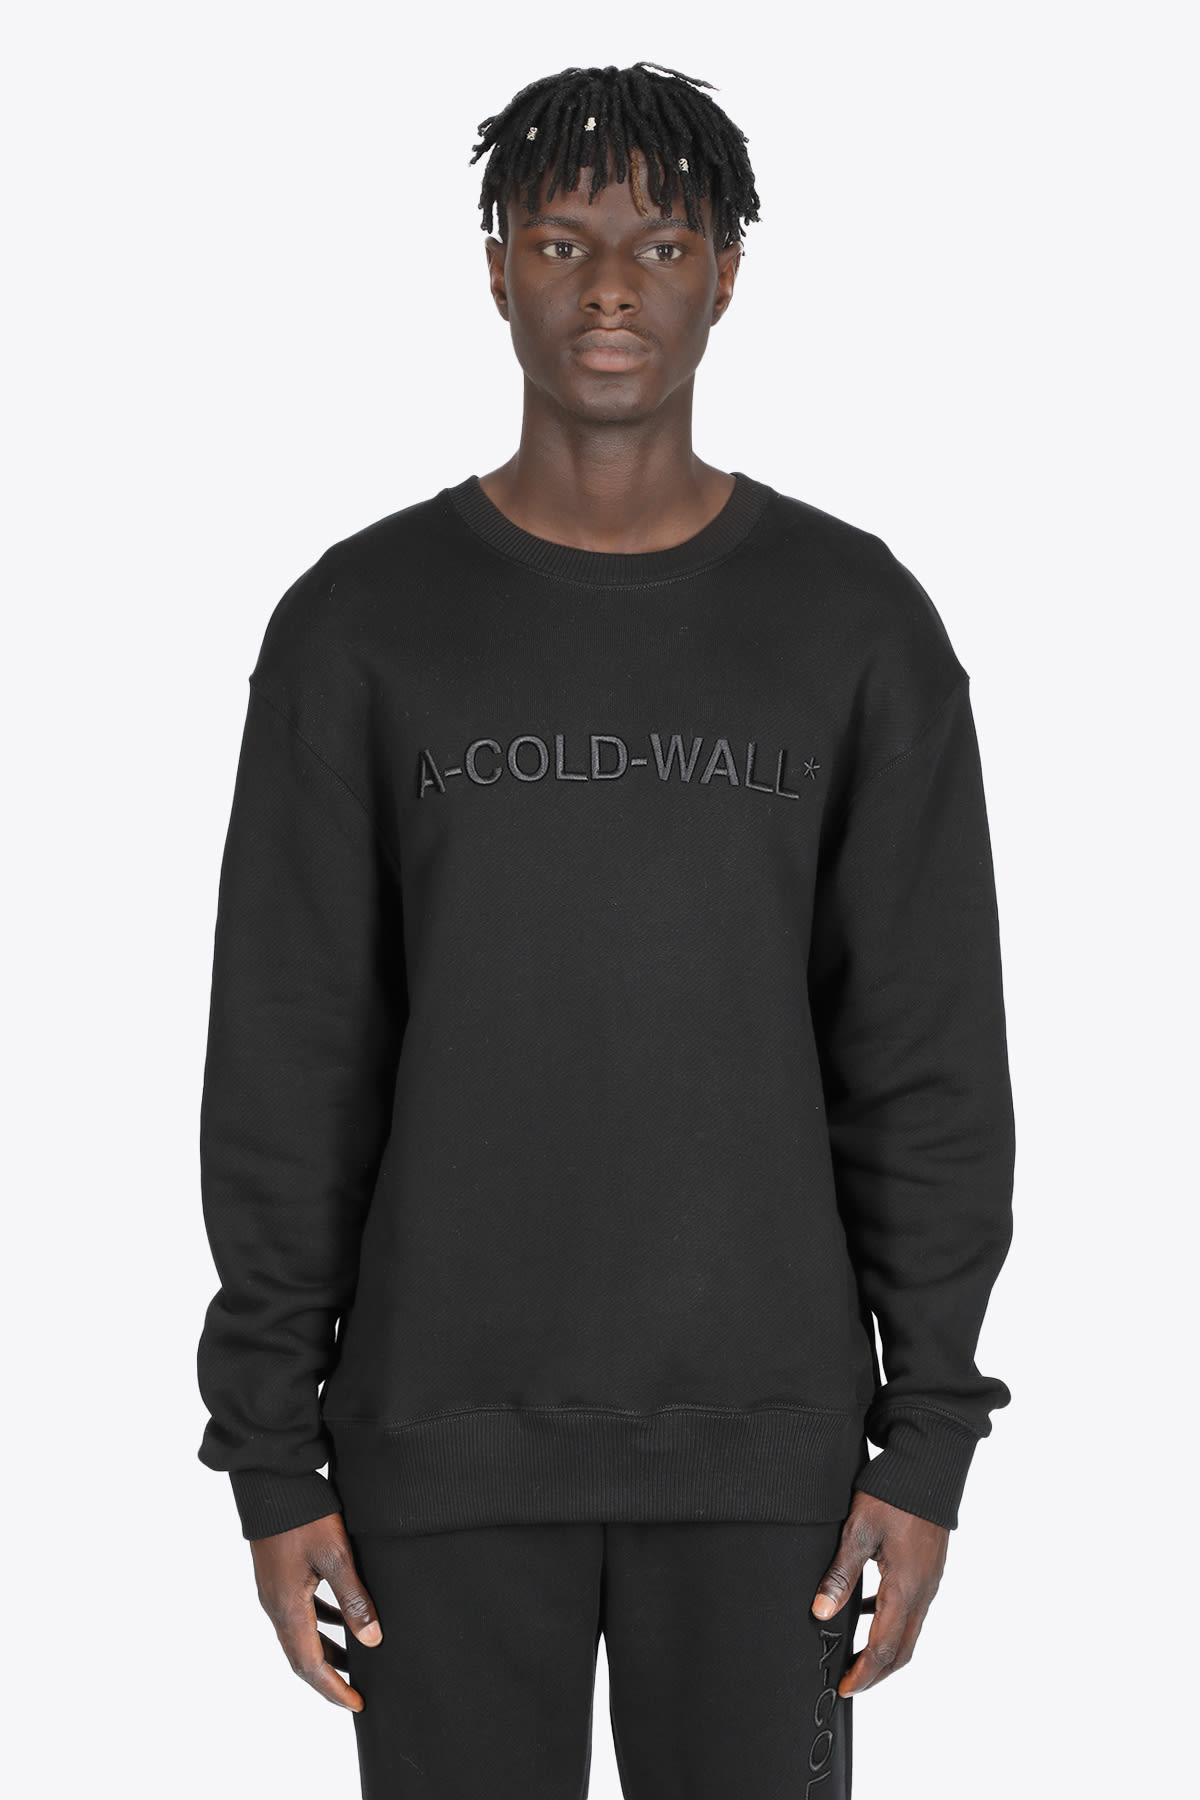 A-COLD-WALL Logo Sweatshirt Black cotton sweatshirt with embroidered logo